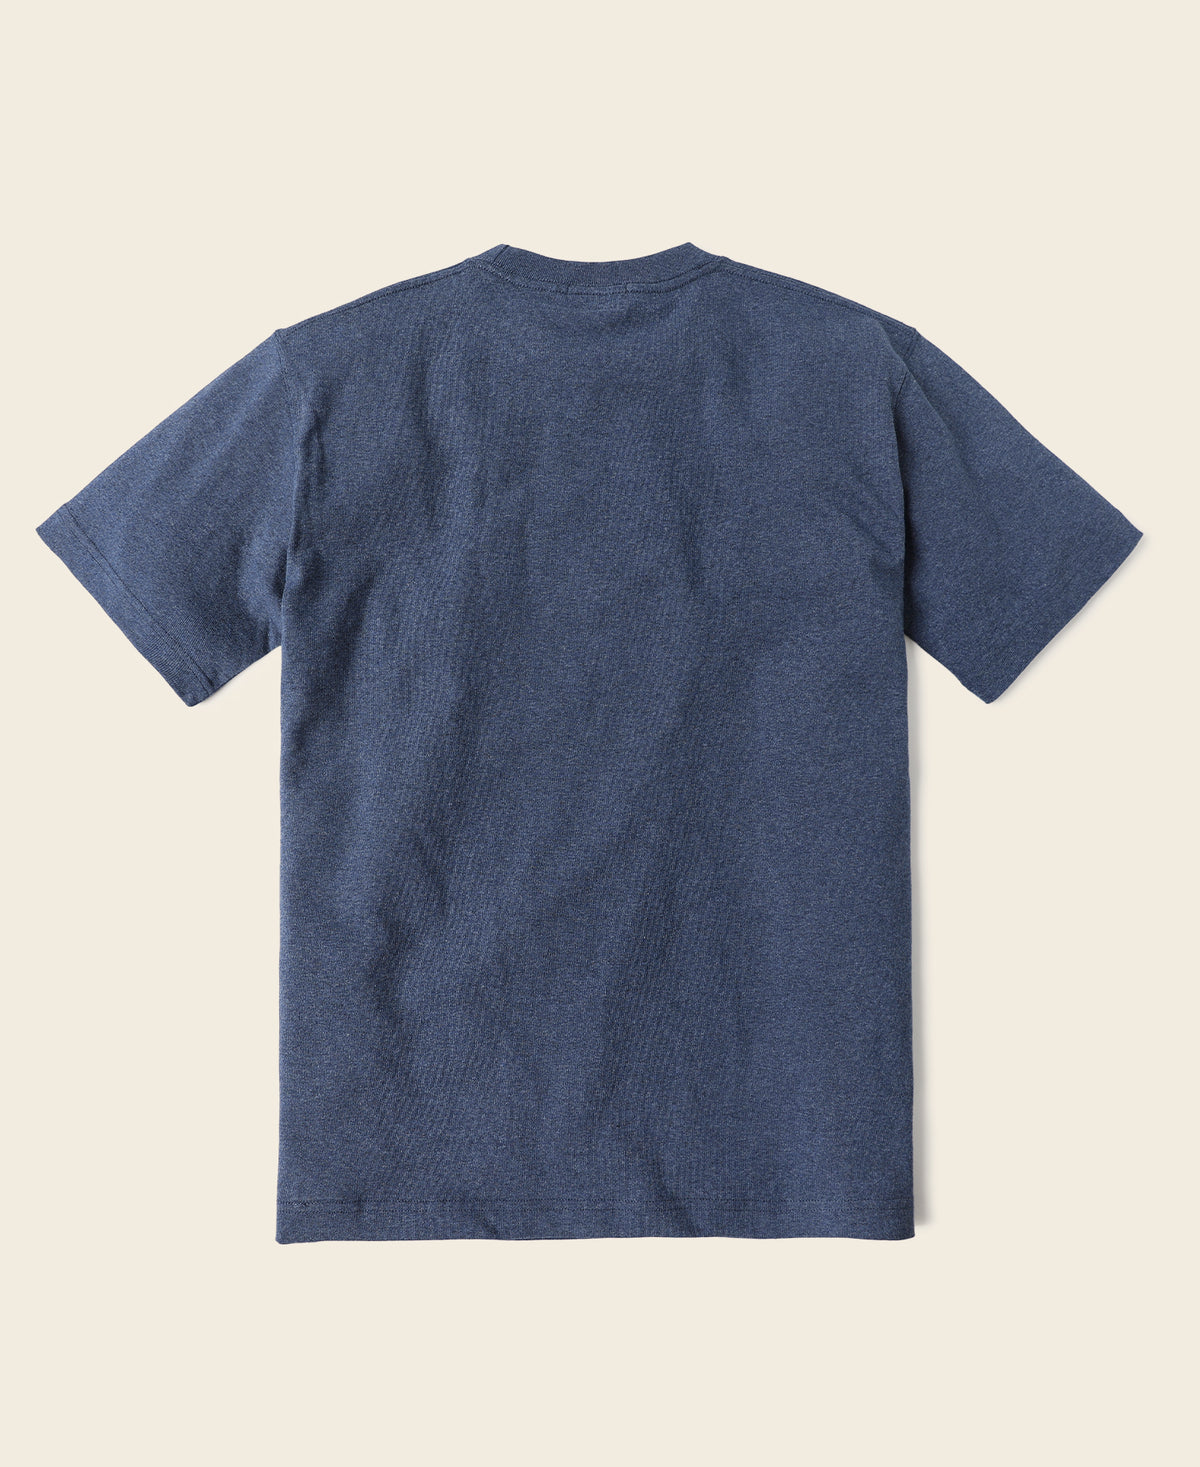 9 oz US Cotton Tubular T-Shirt - Denim Blue